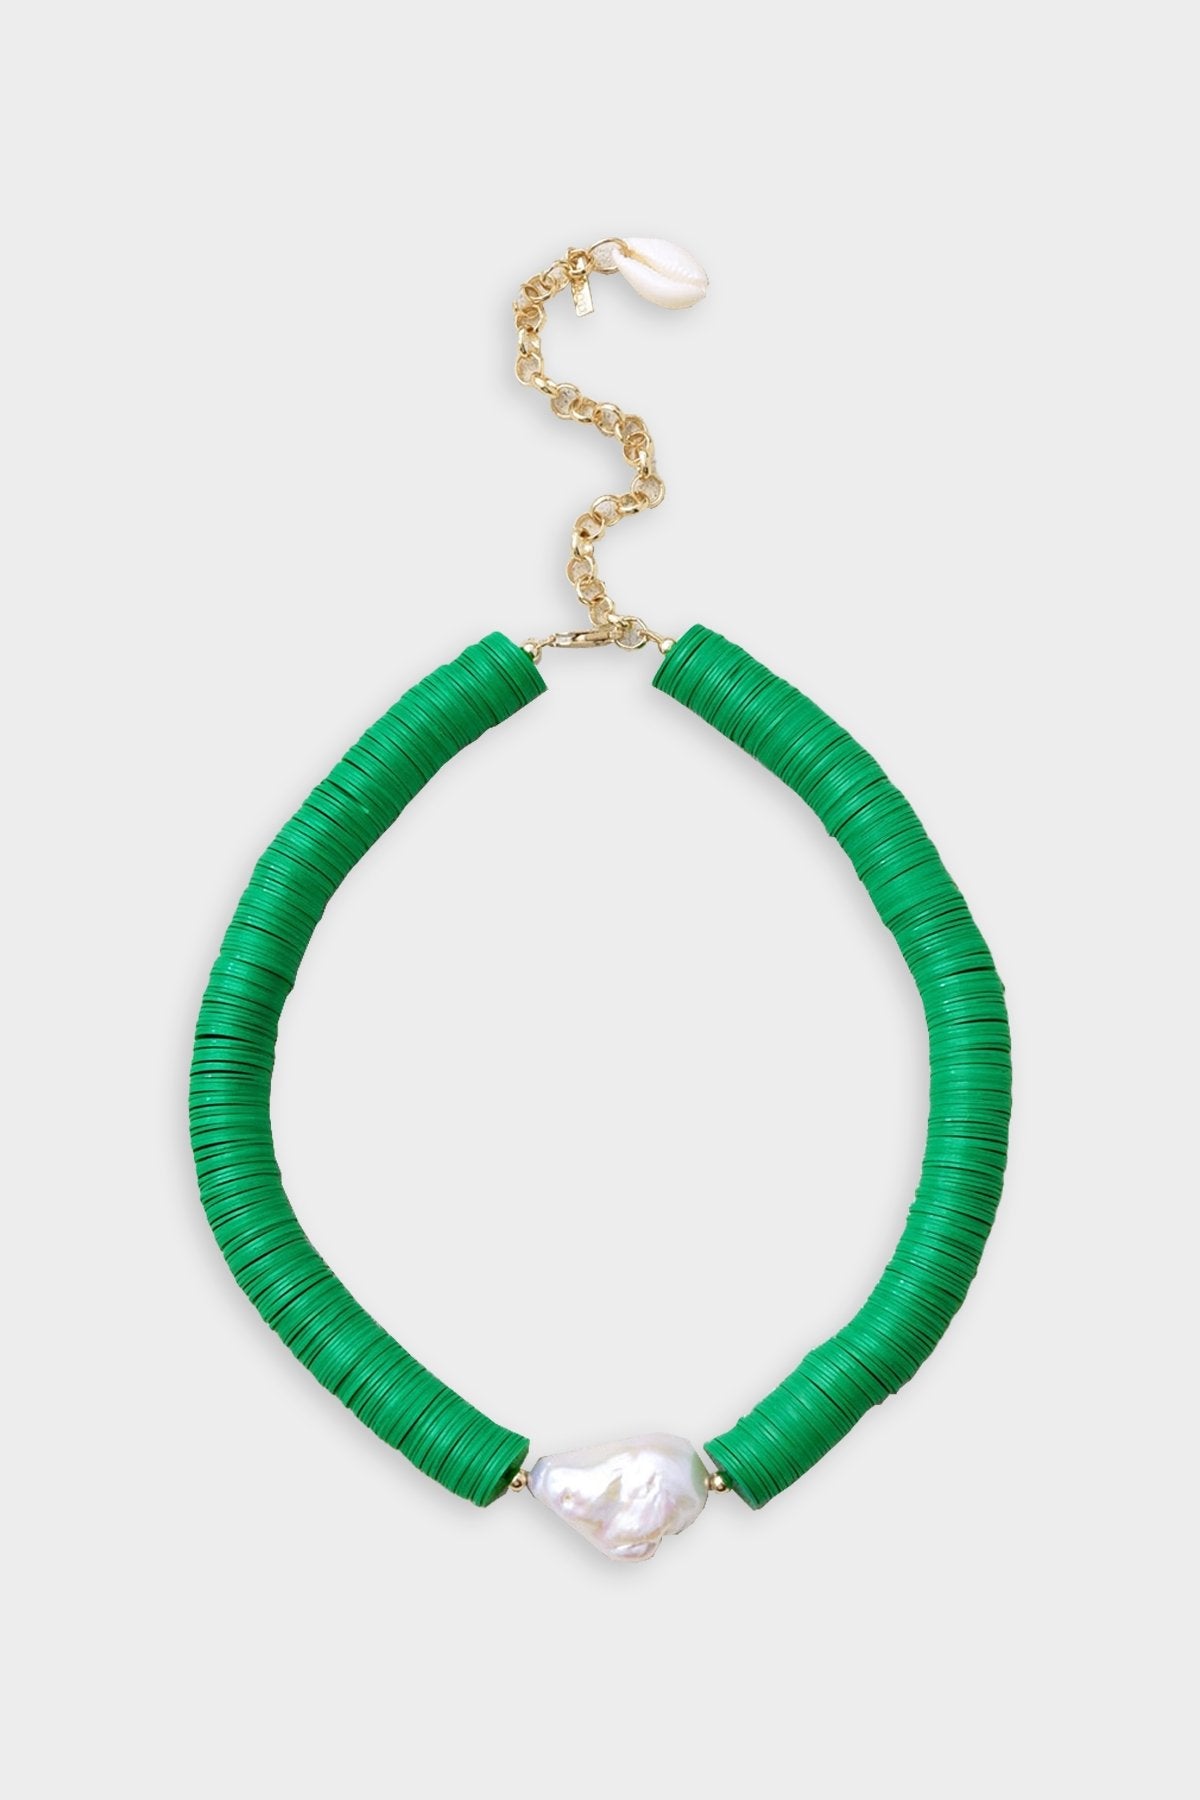 Rhye Necklace in Green - shop-olivia.com